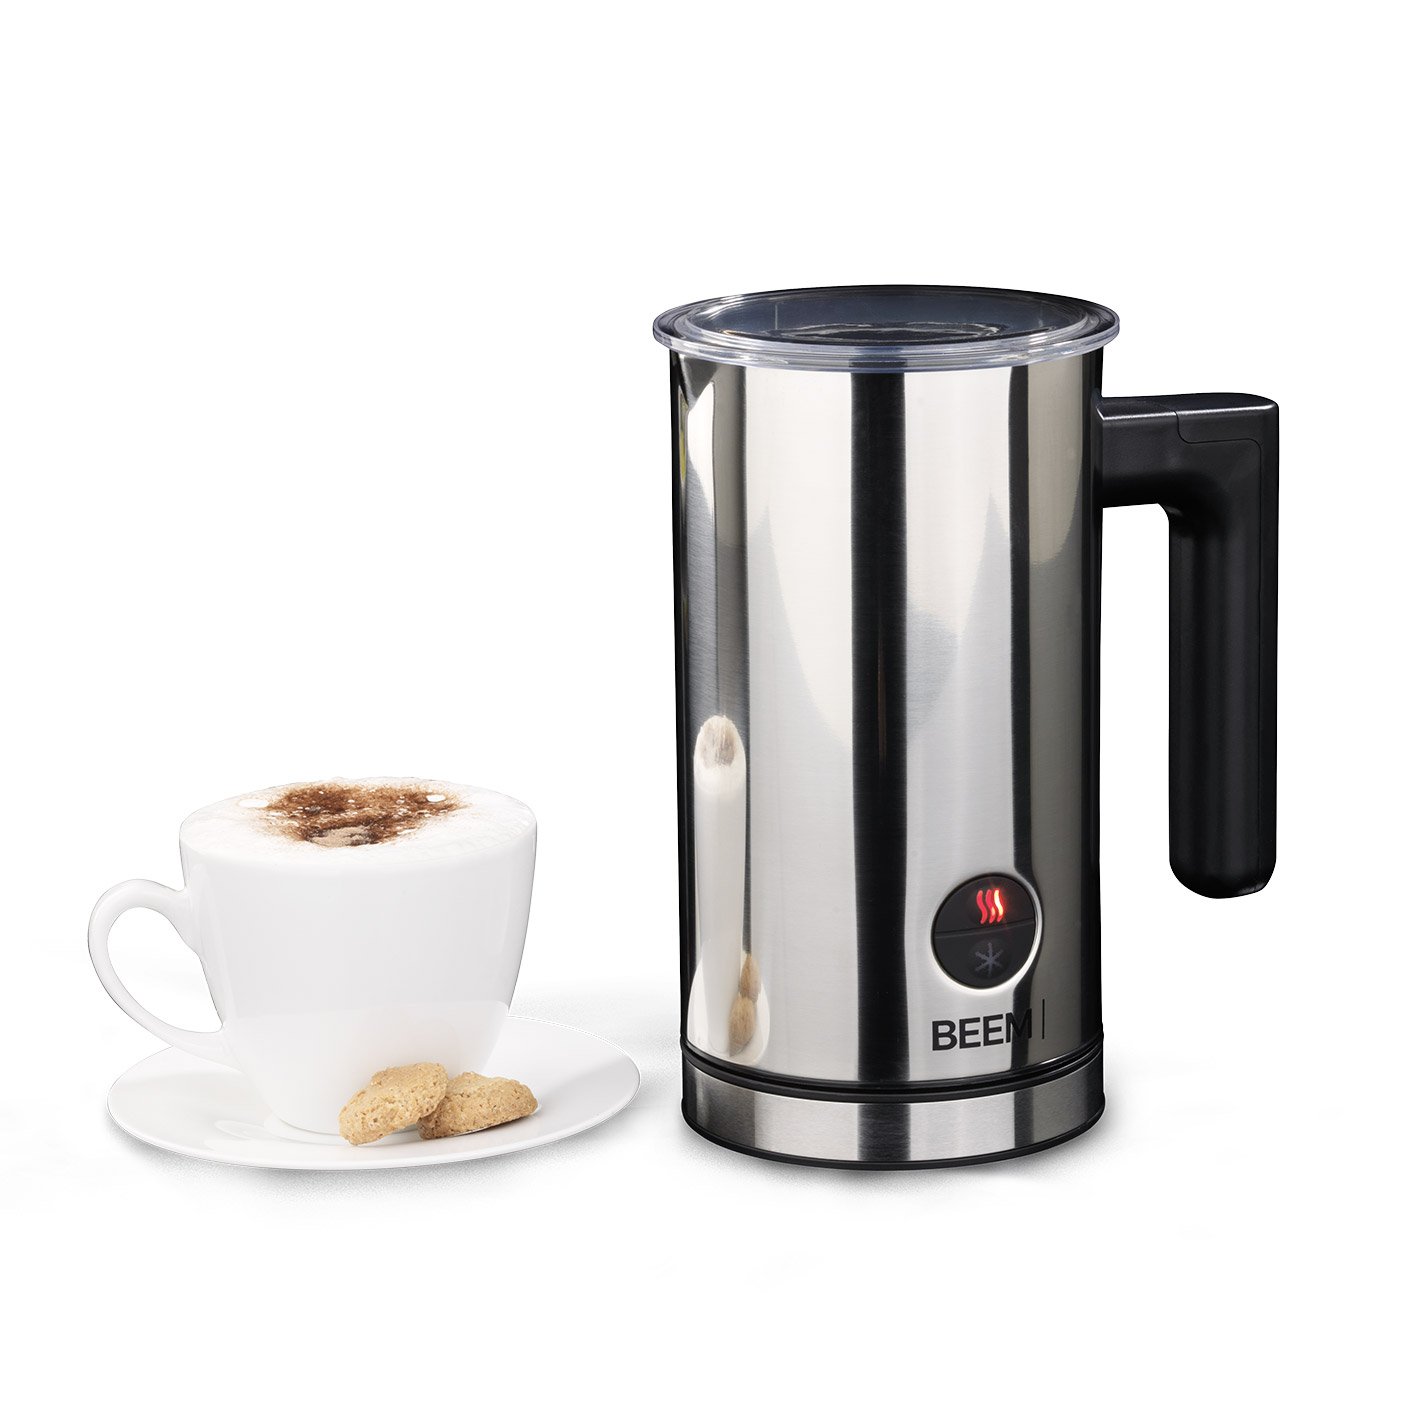 Beem Milk Frother 1110Bk – Elements Of Coffee & Tea, 650 W, 4 Program Setti